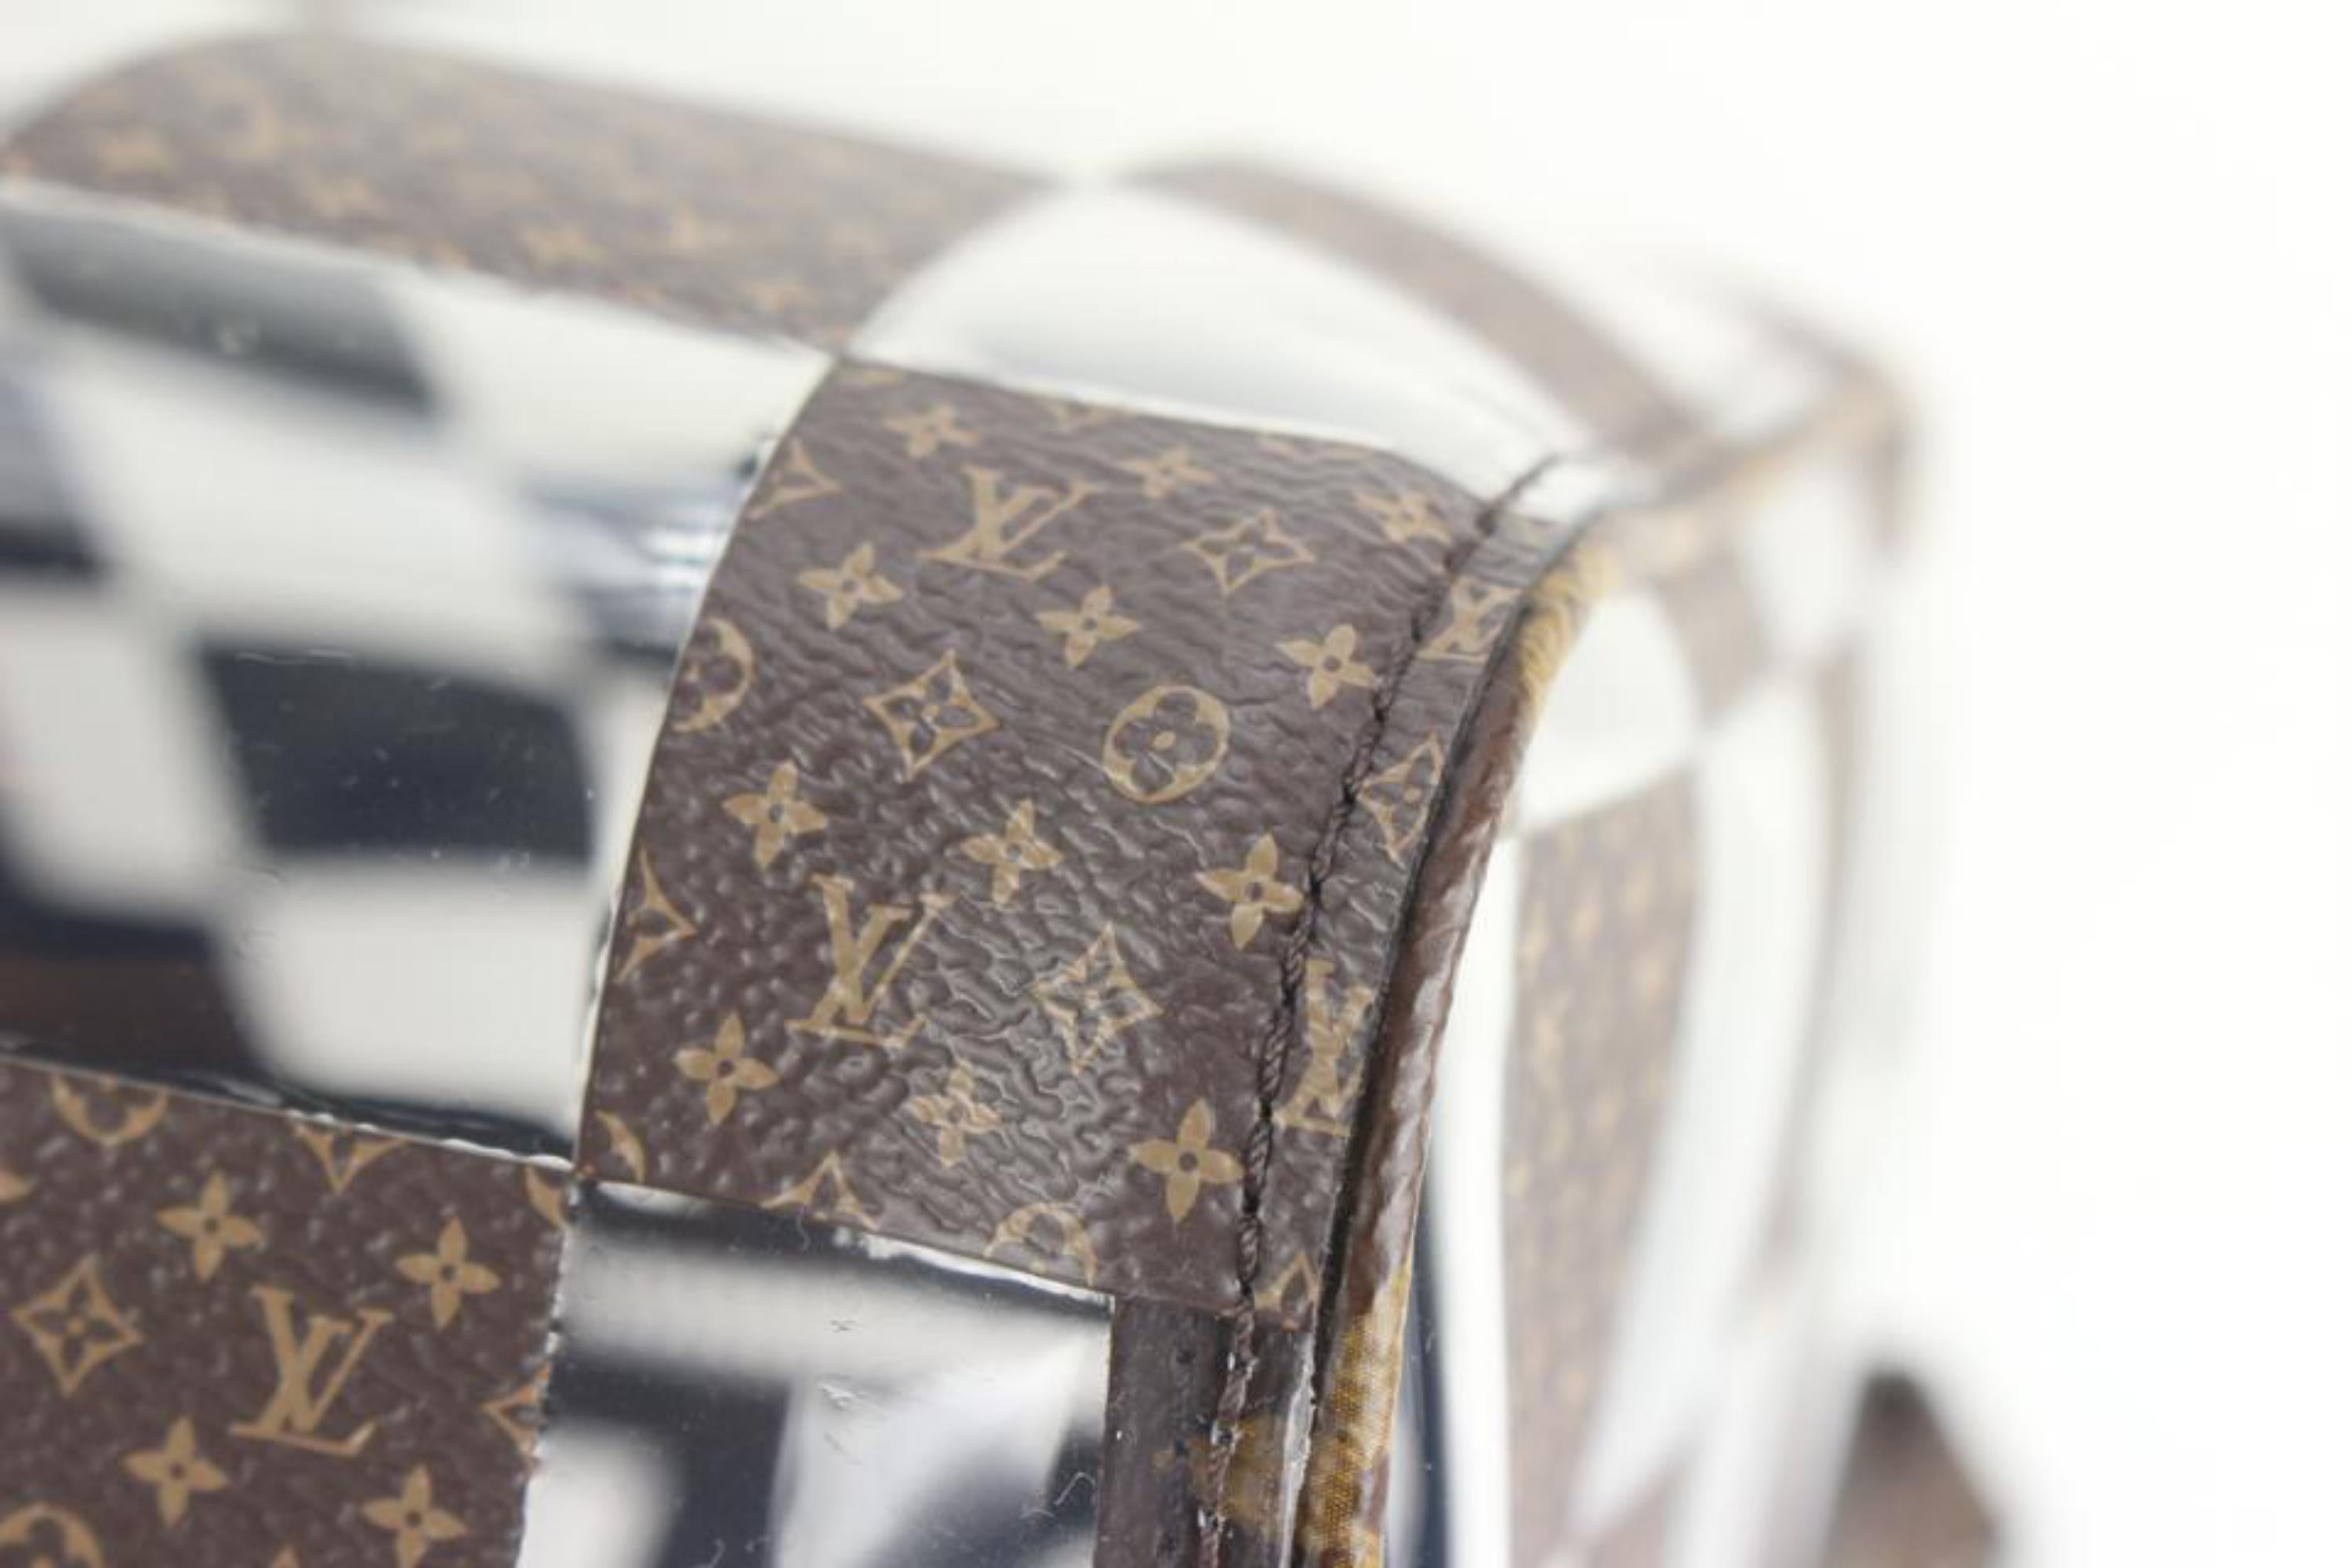 Louis Vuitton Keepall Rgb Clear Ss19 Virgil 50 870439 Red Pvc